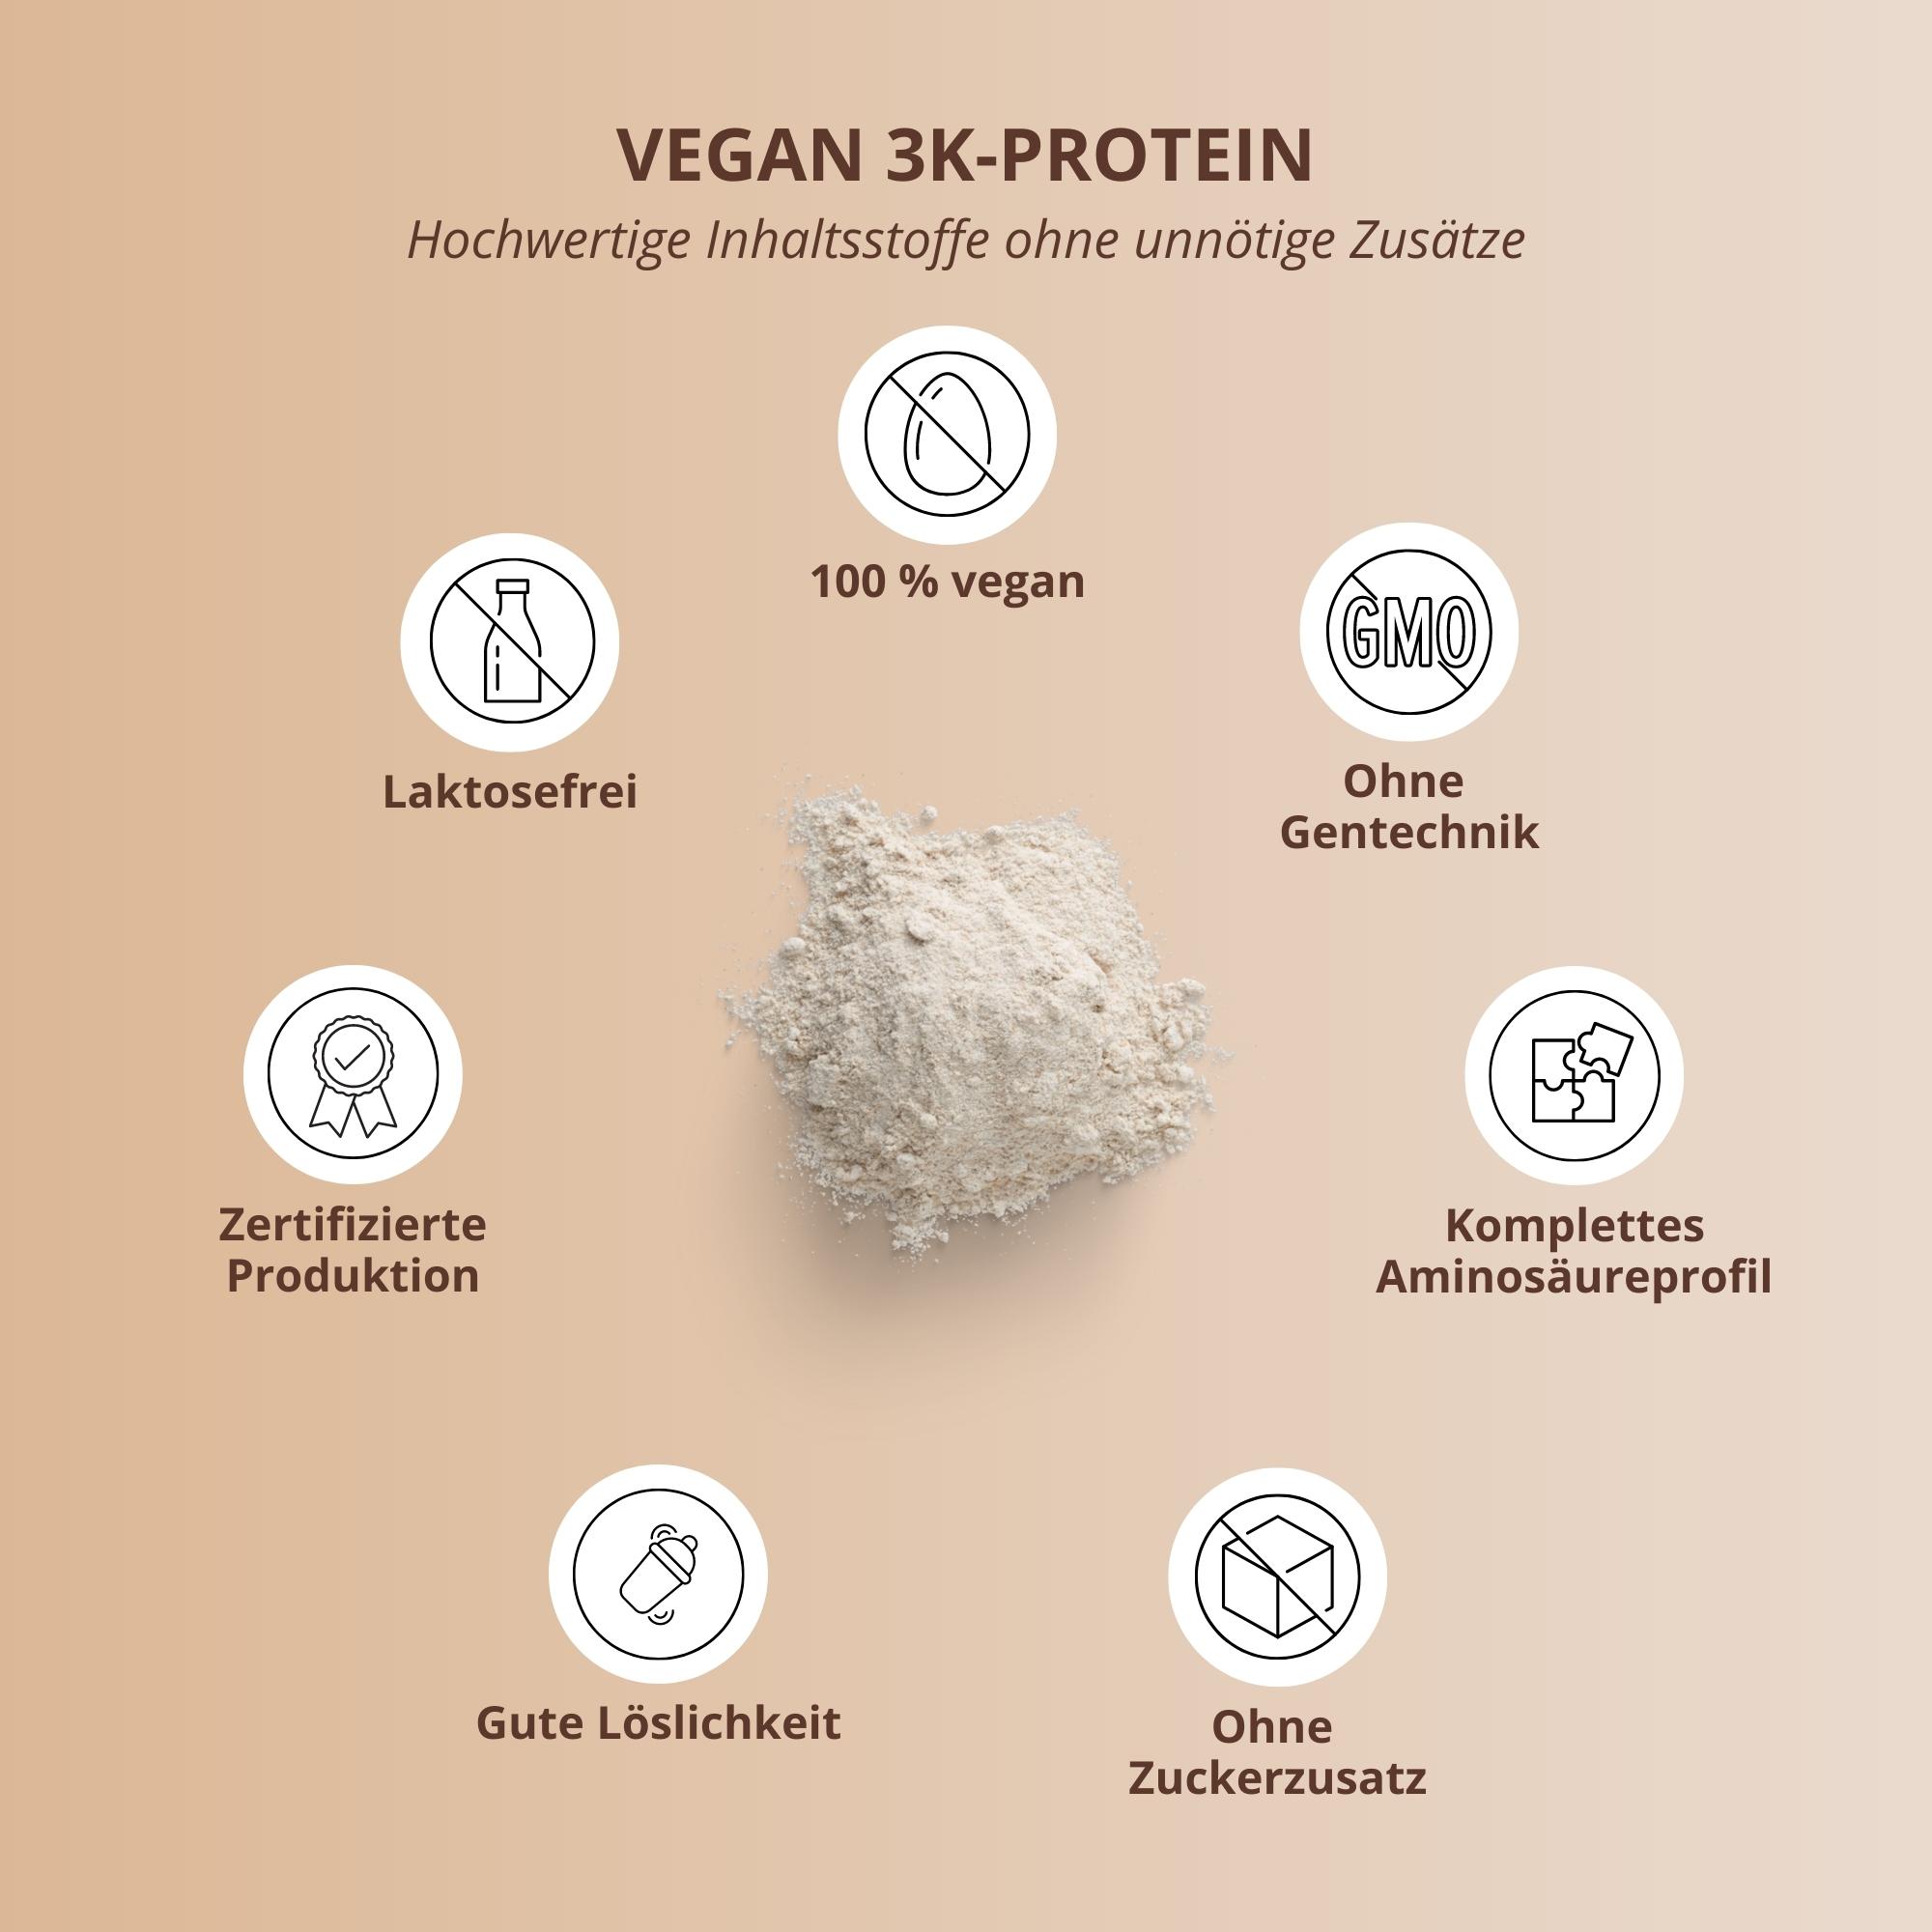 Vegan 3K Protein Powder